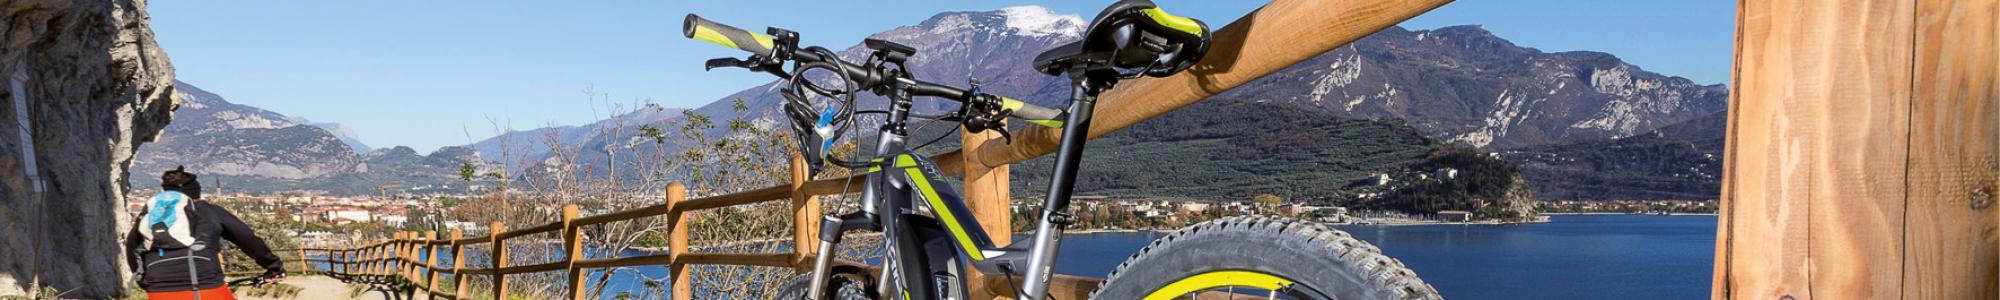 RUDY GIFT BOX - E-Bike Experience et SPA